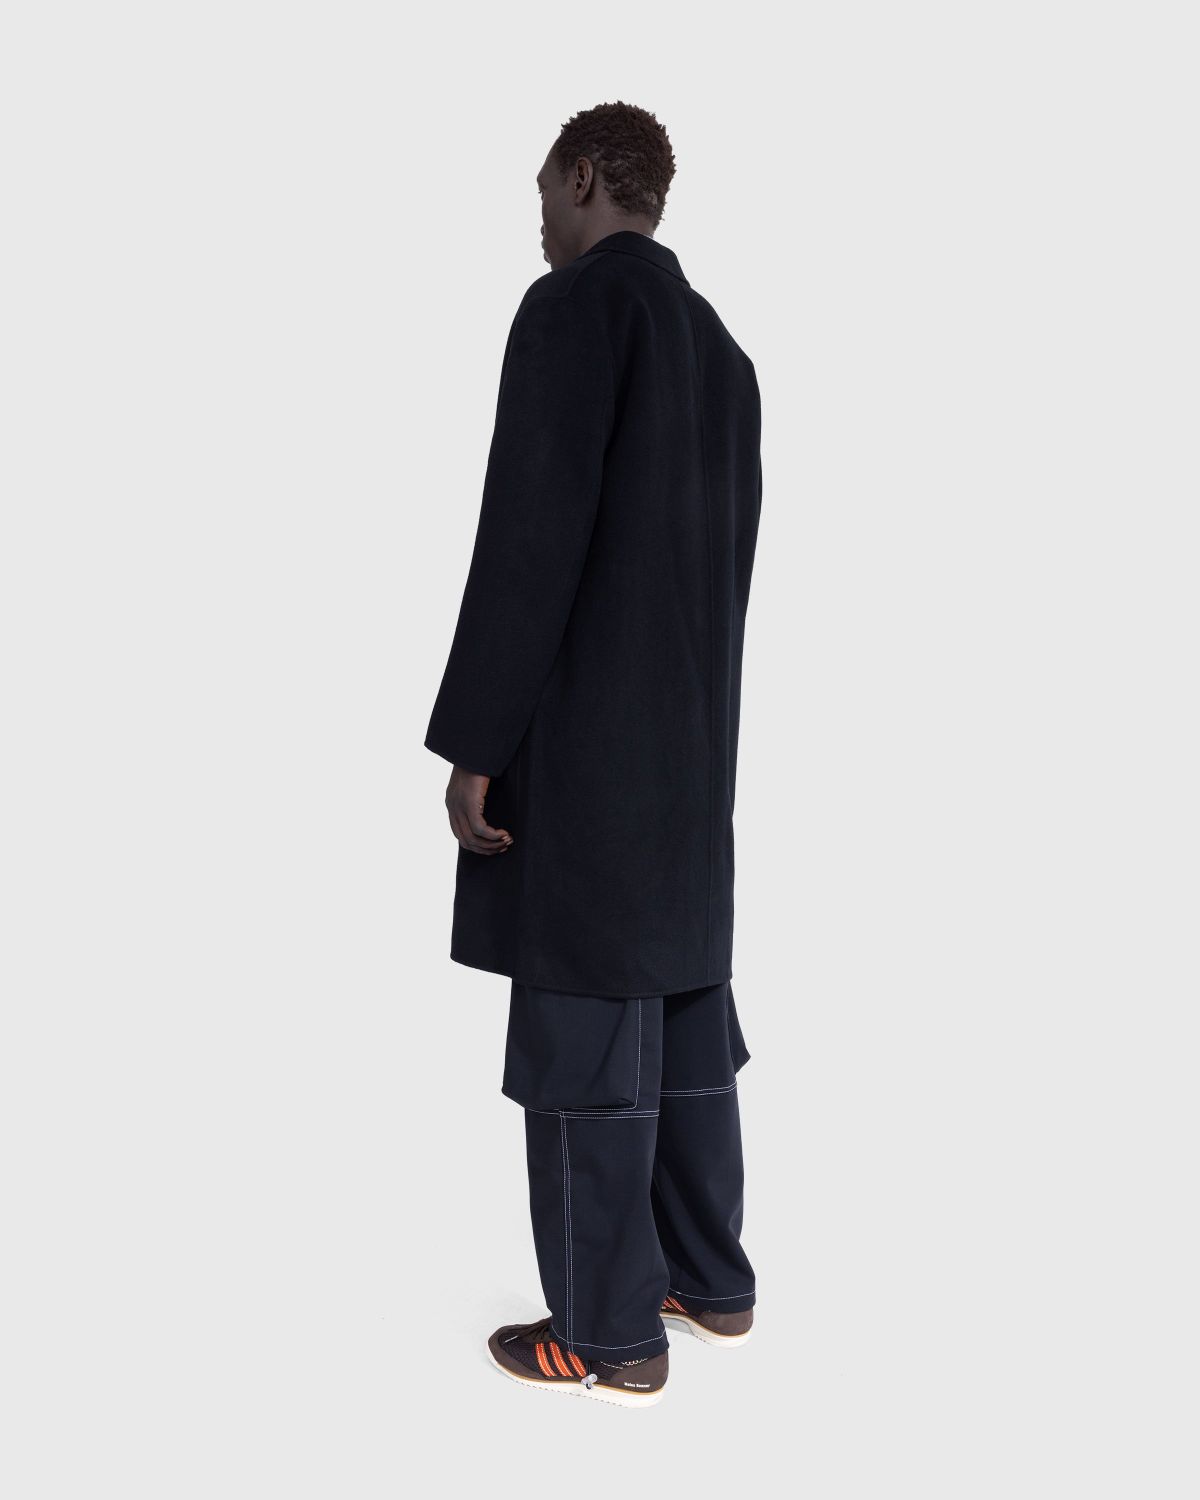 Acne Studios – Single-Breasted Coat Black - Trench Coats - Black - Image 3